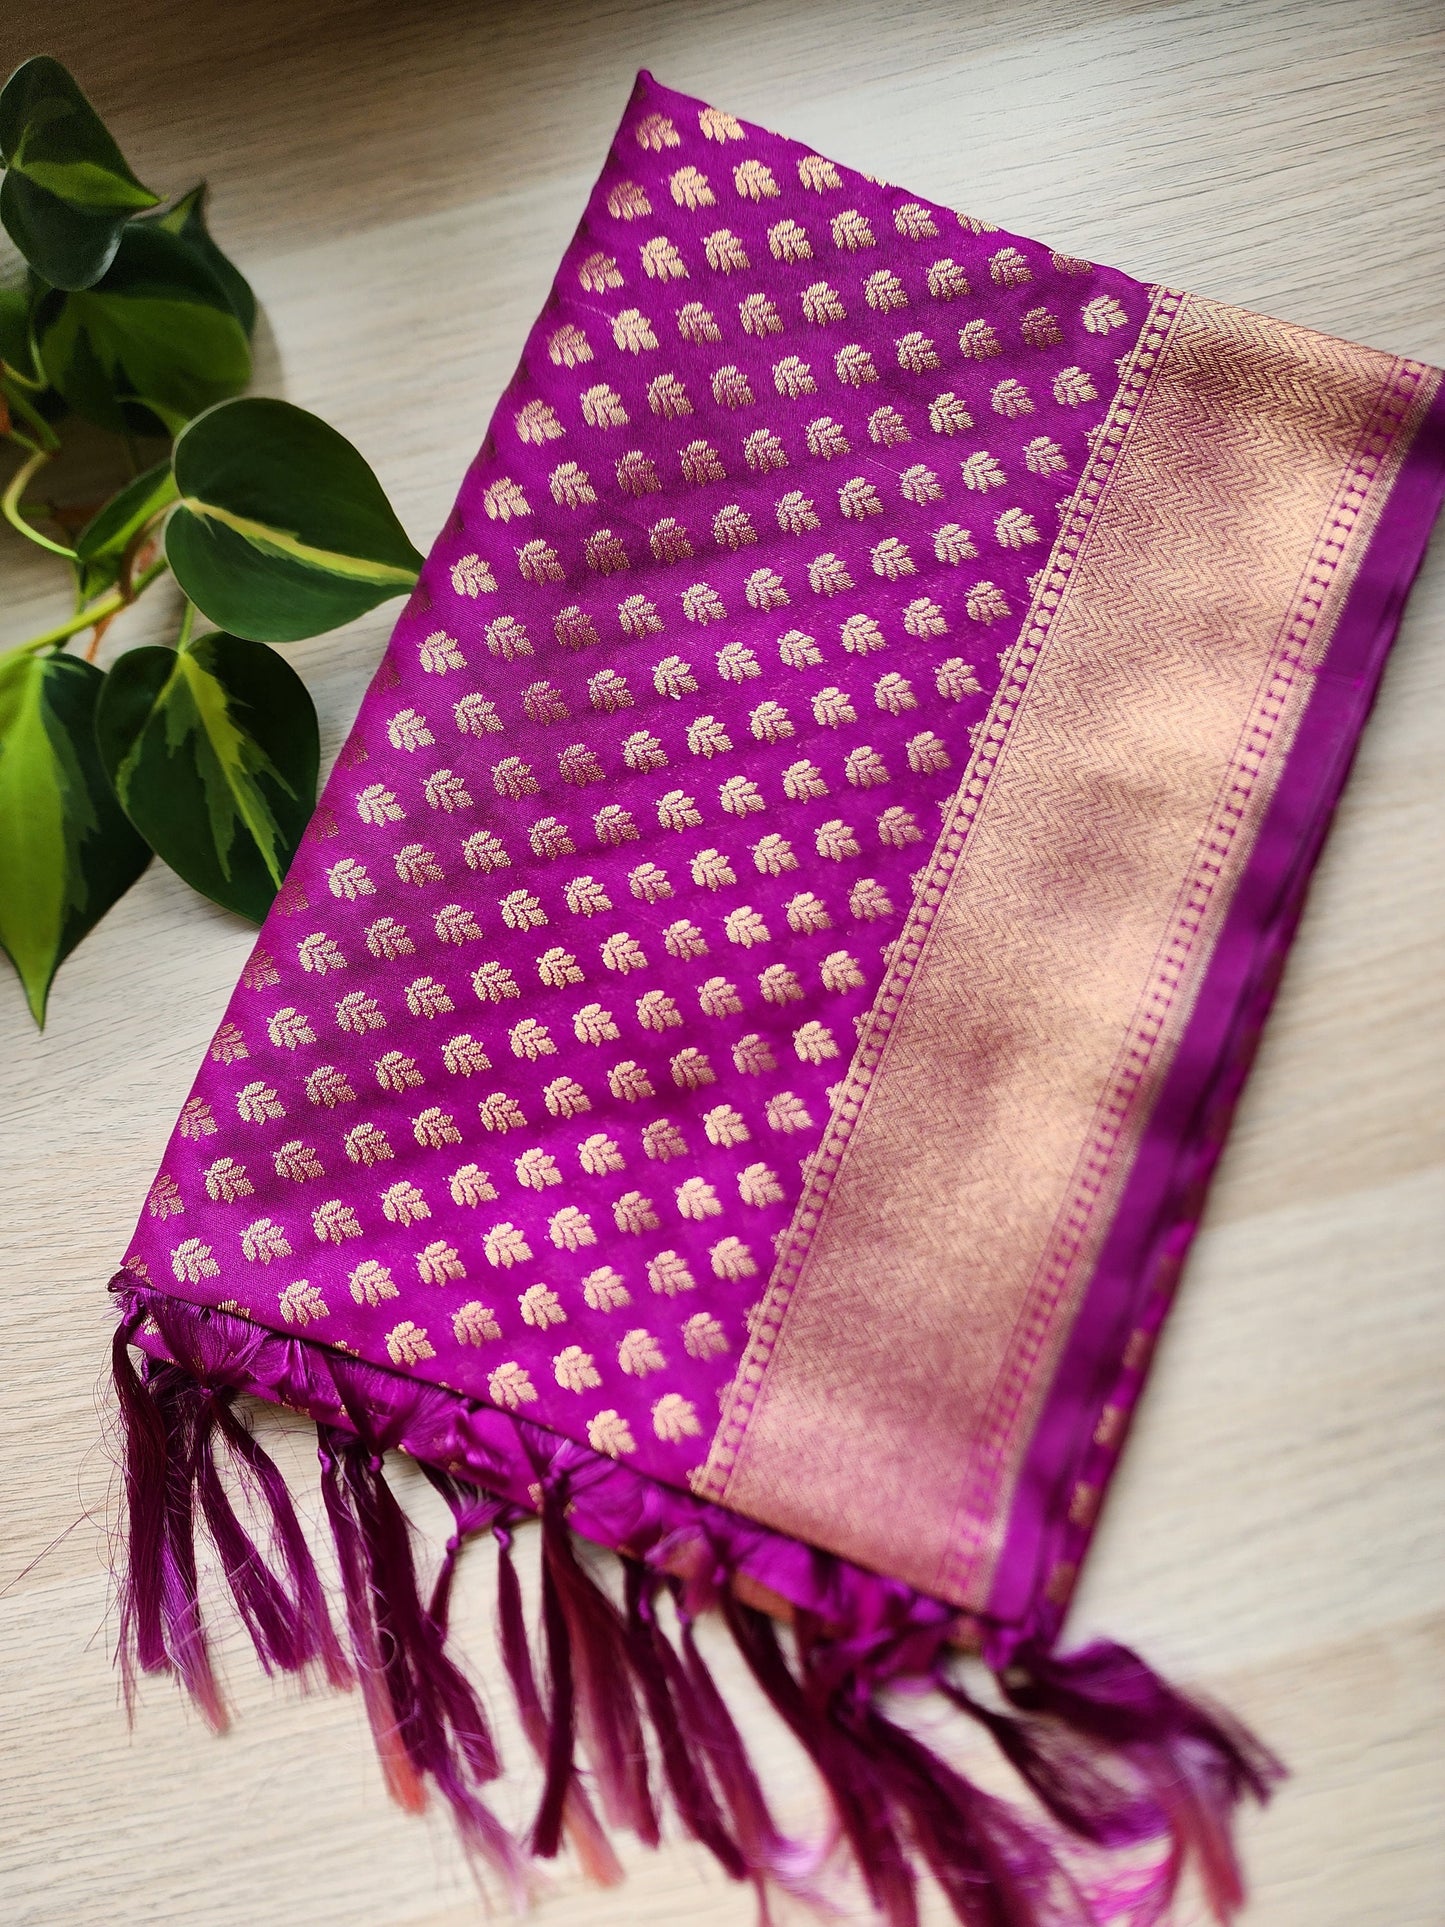 Banarasi Silk Purple Color Dupatta with gold handweaving, Indian traditional and Festive designer dupatta, luxurious soft Banarsi dupatta